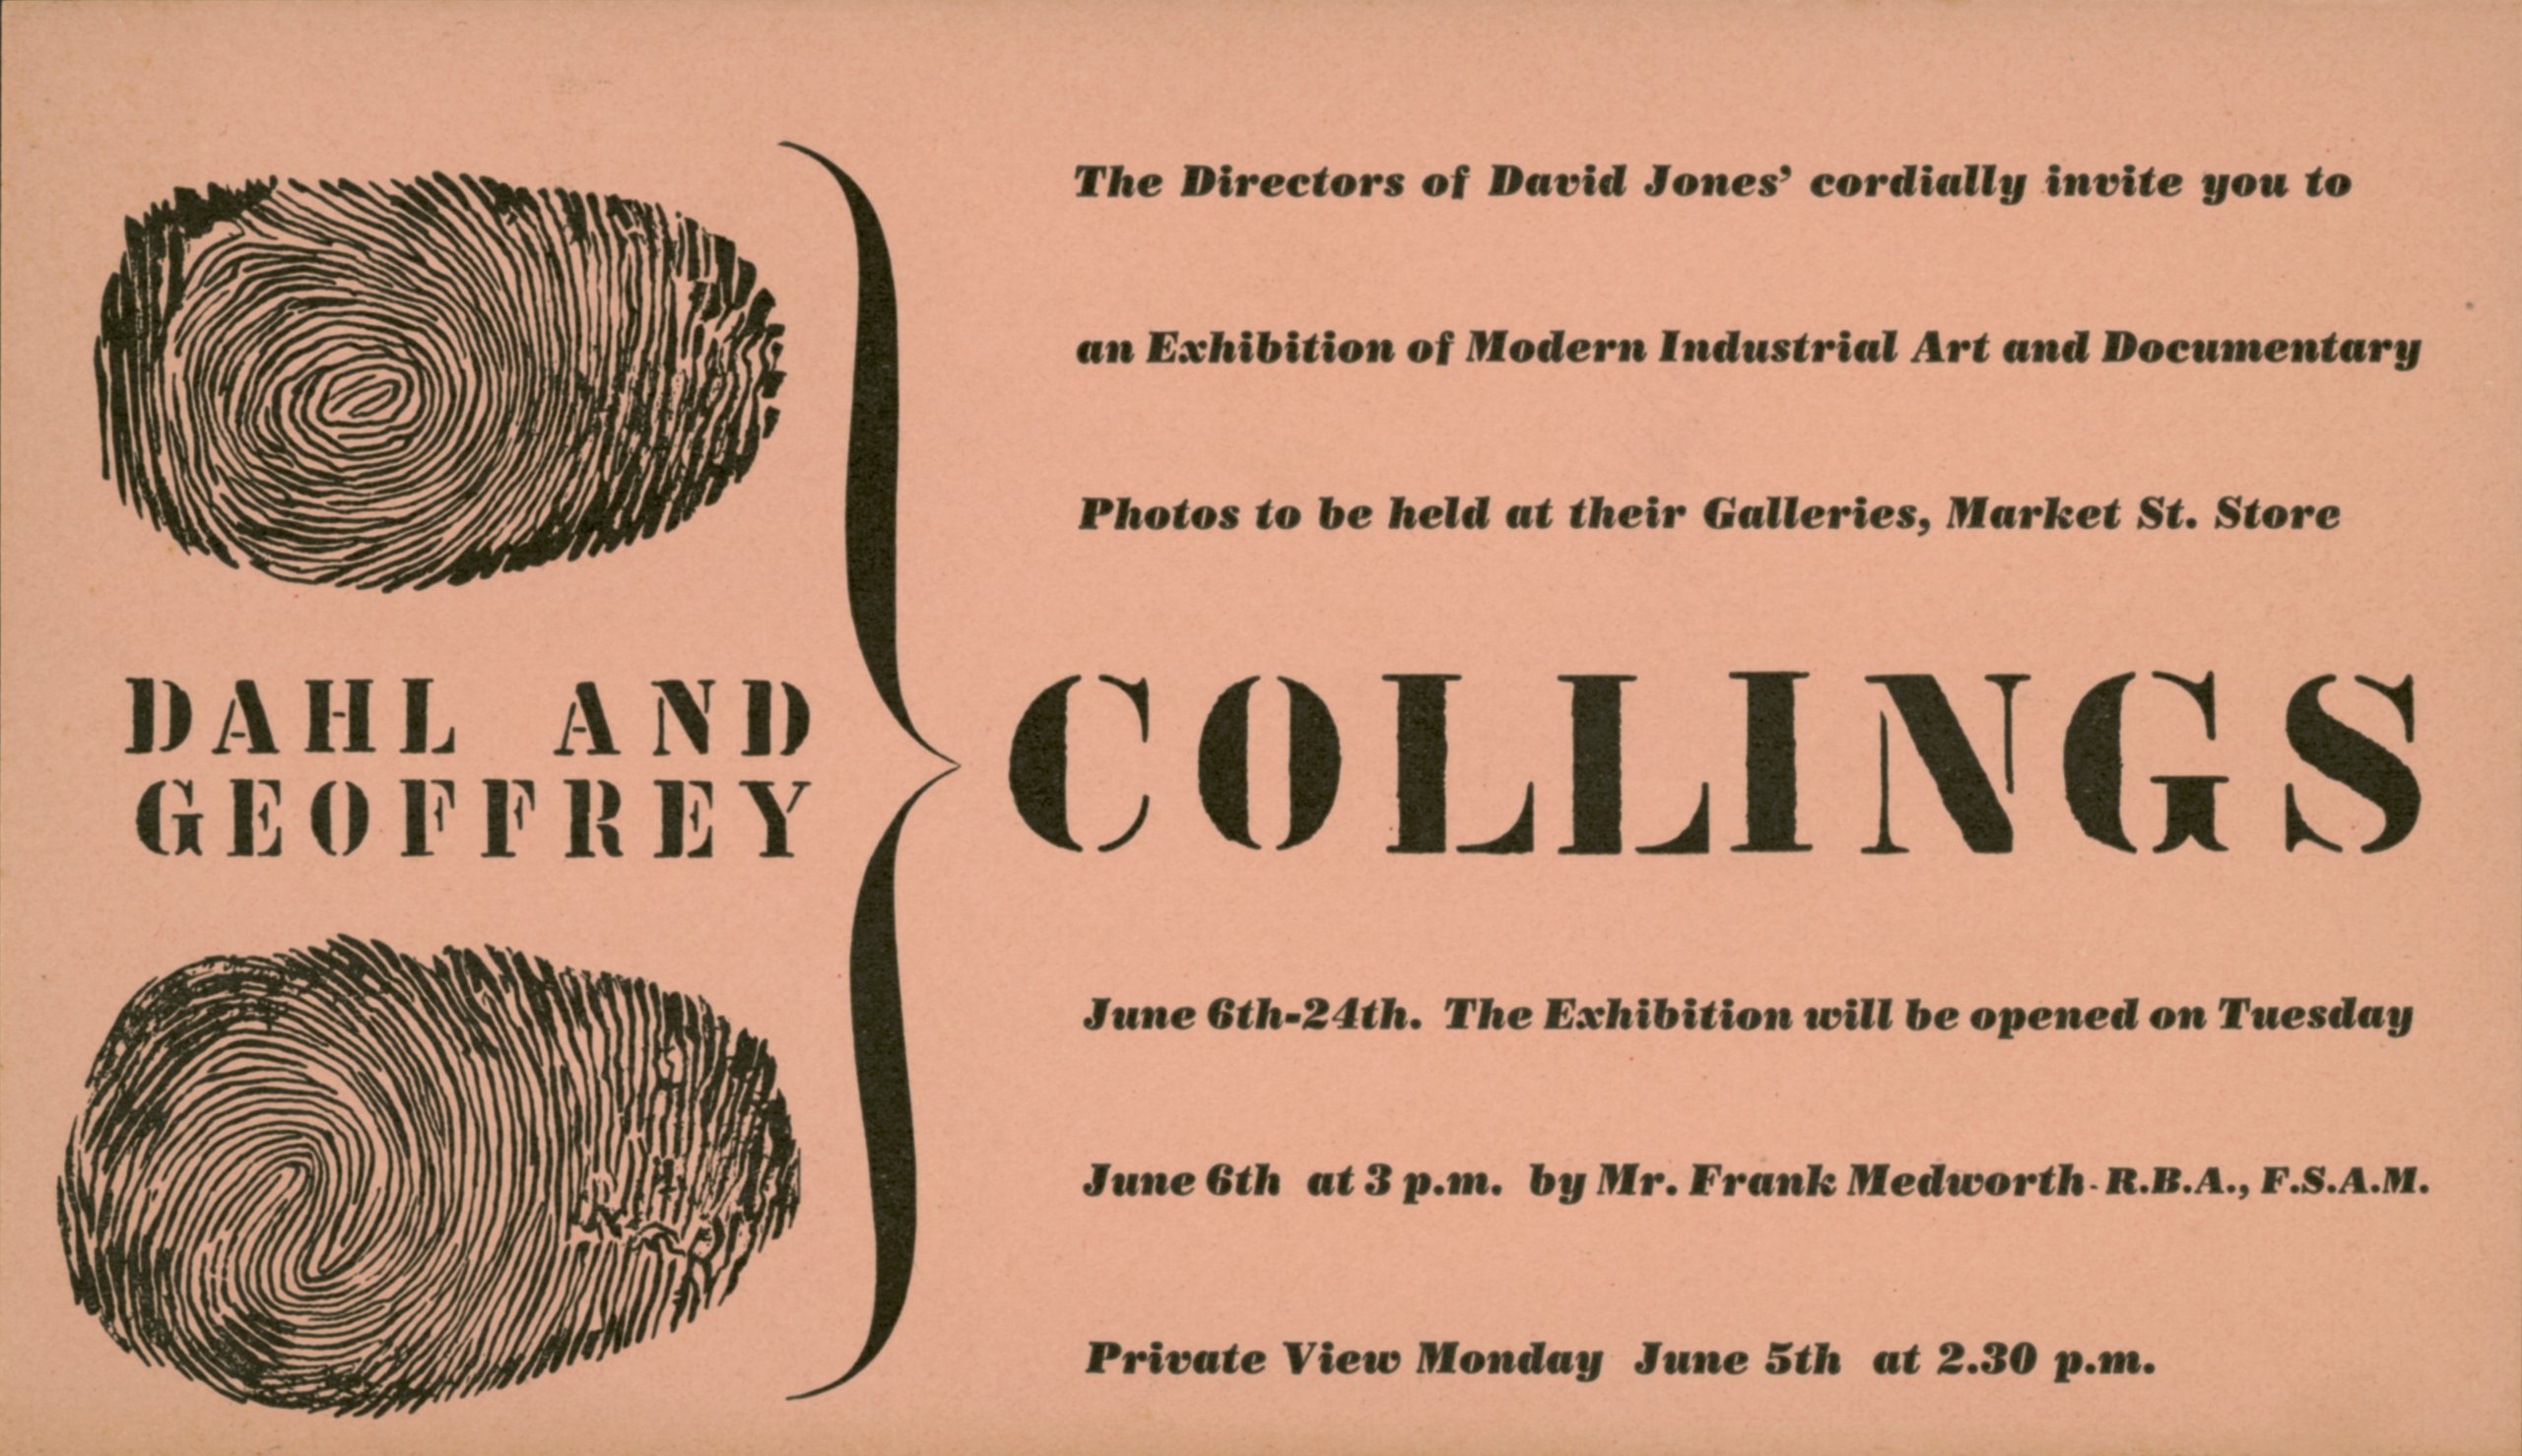 Invitation to Dahl & Geoffrey Collings' exhibition at the David Jones Gallery